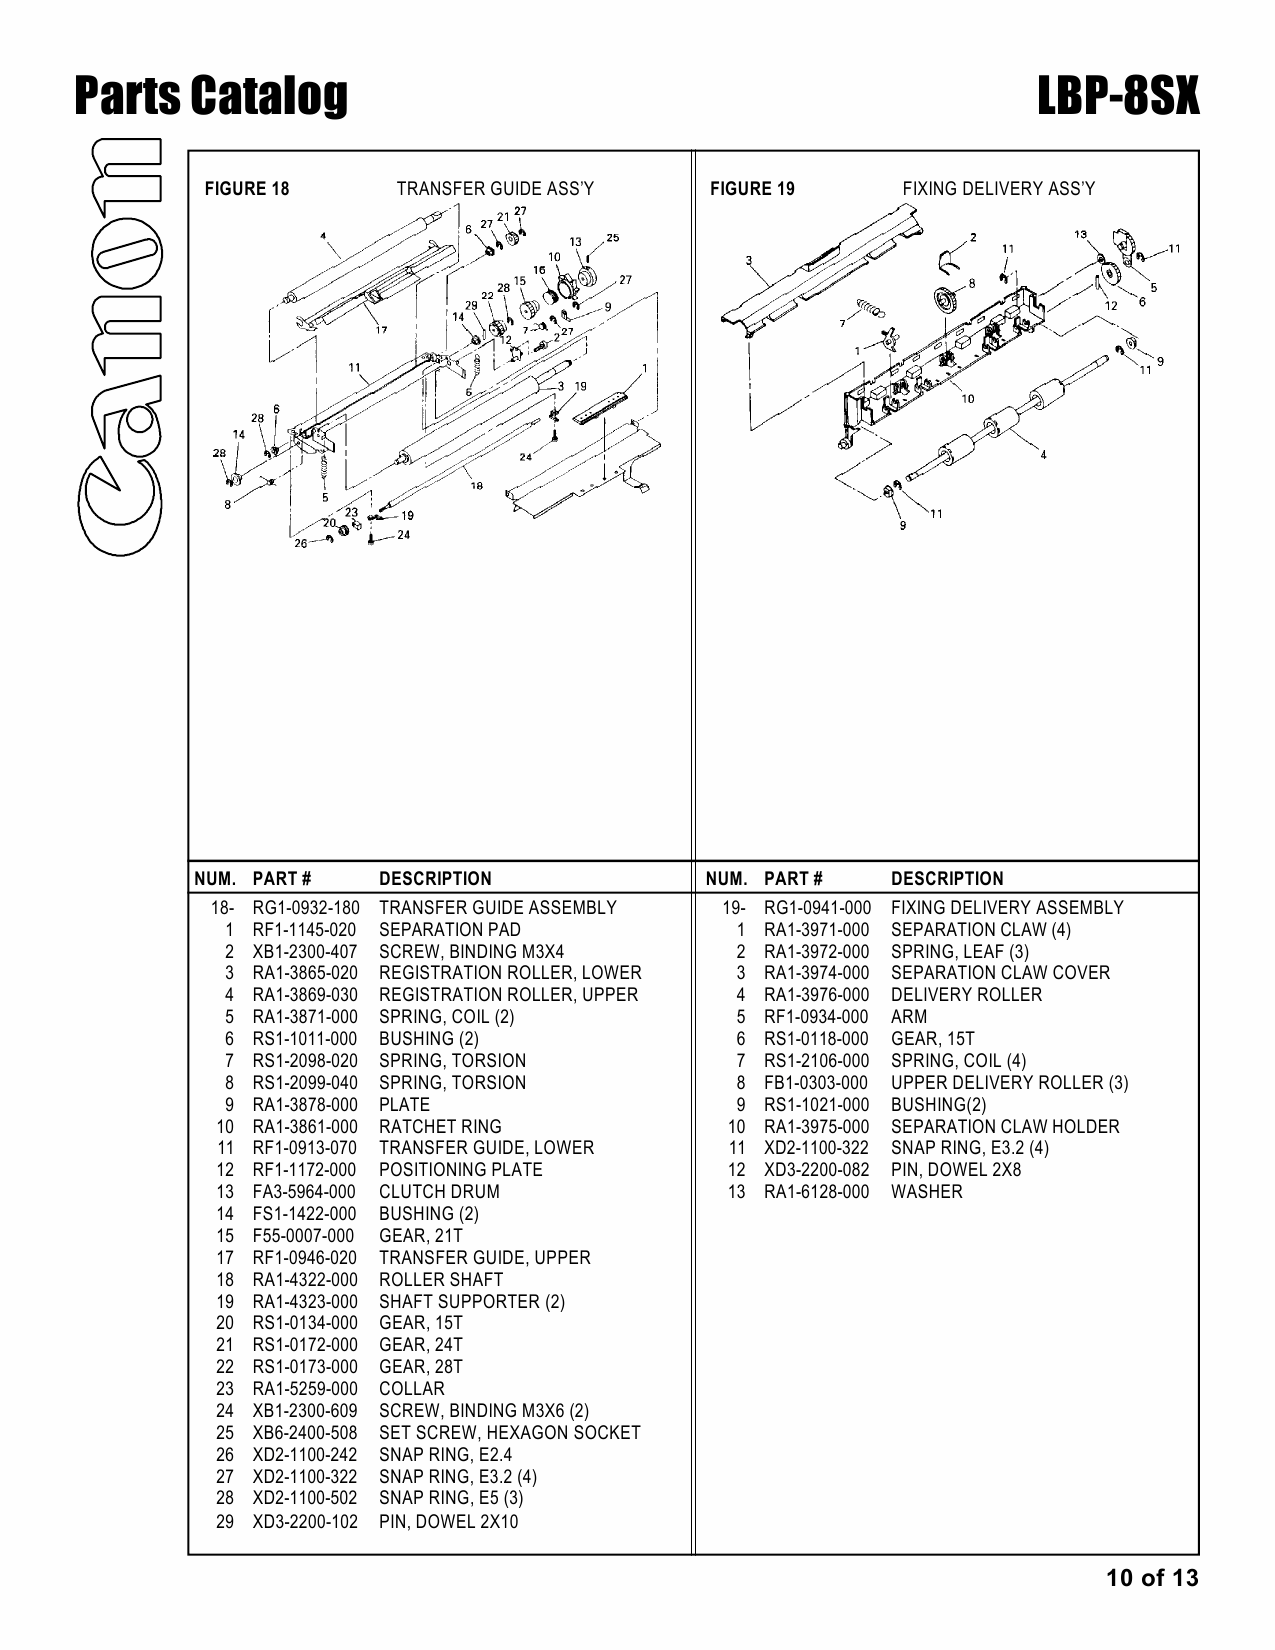 Canon imageCLASS LBP-8sx Parts Catalog Manual-4